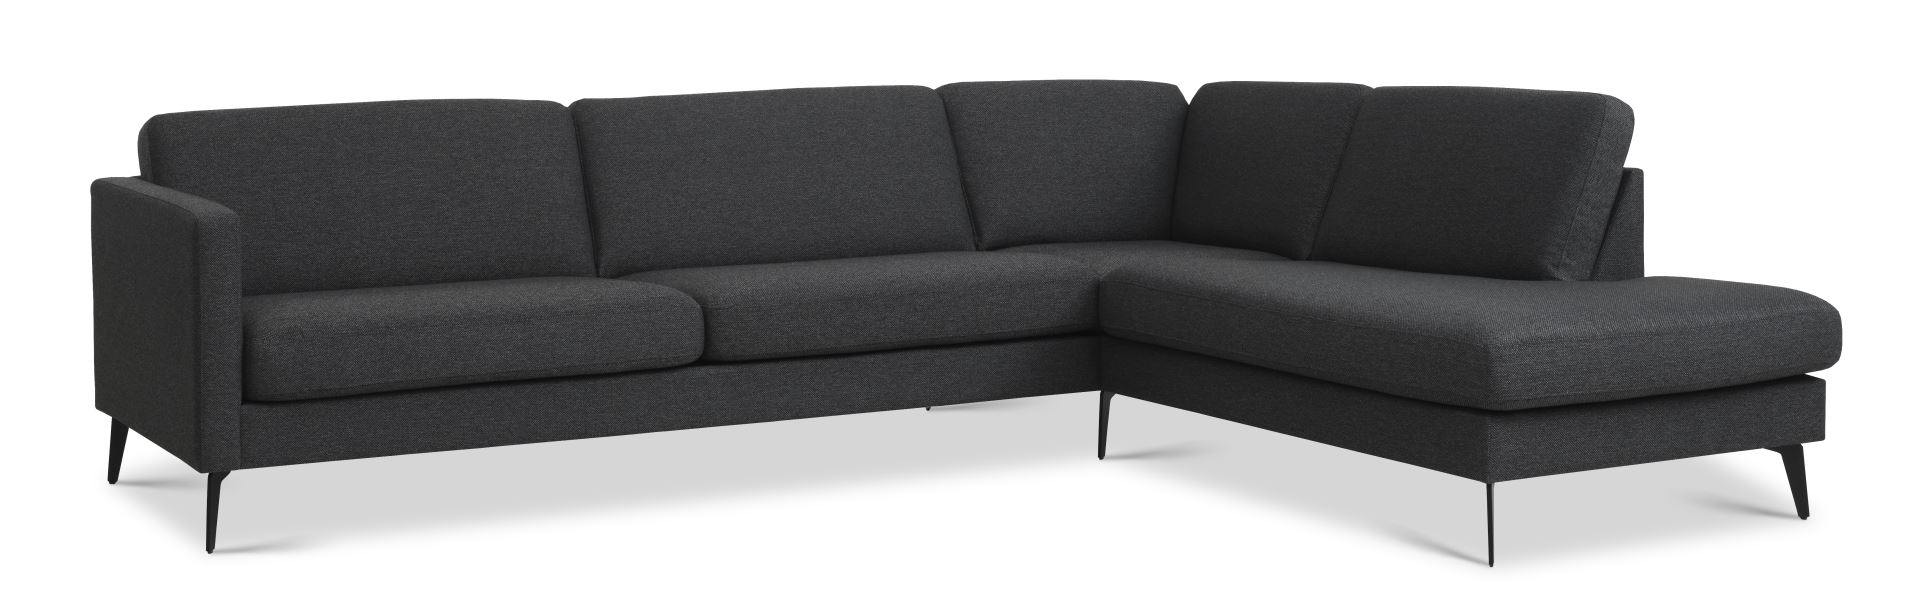 Ask sæt 61 stor OE sofa, m. højre chaiselong - antracitgrå polyester stof og Eiffel ben